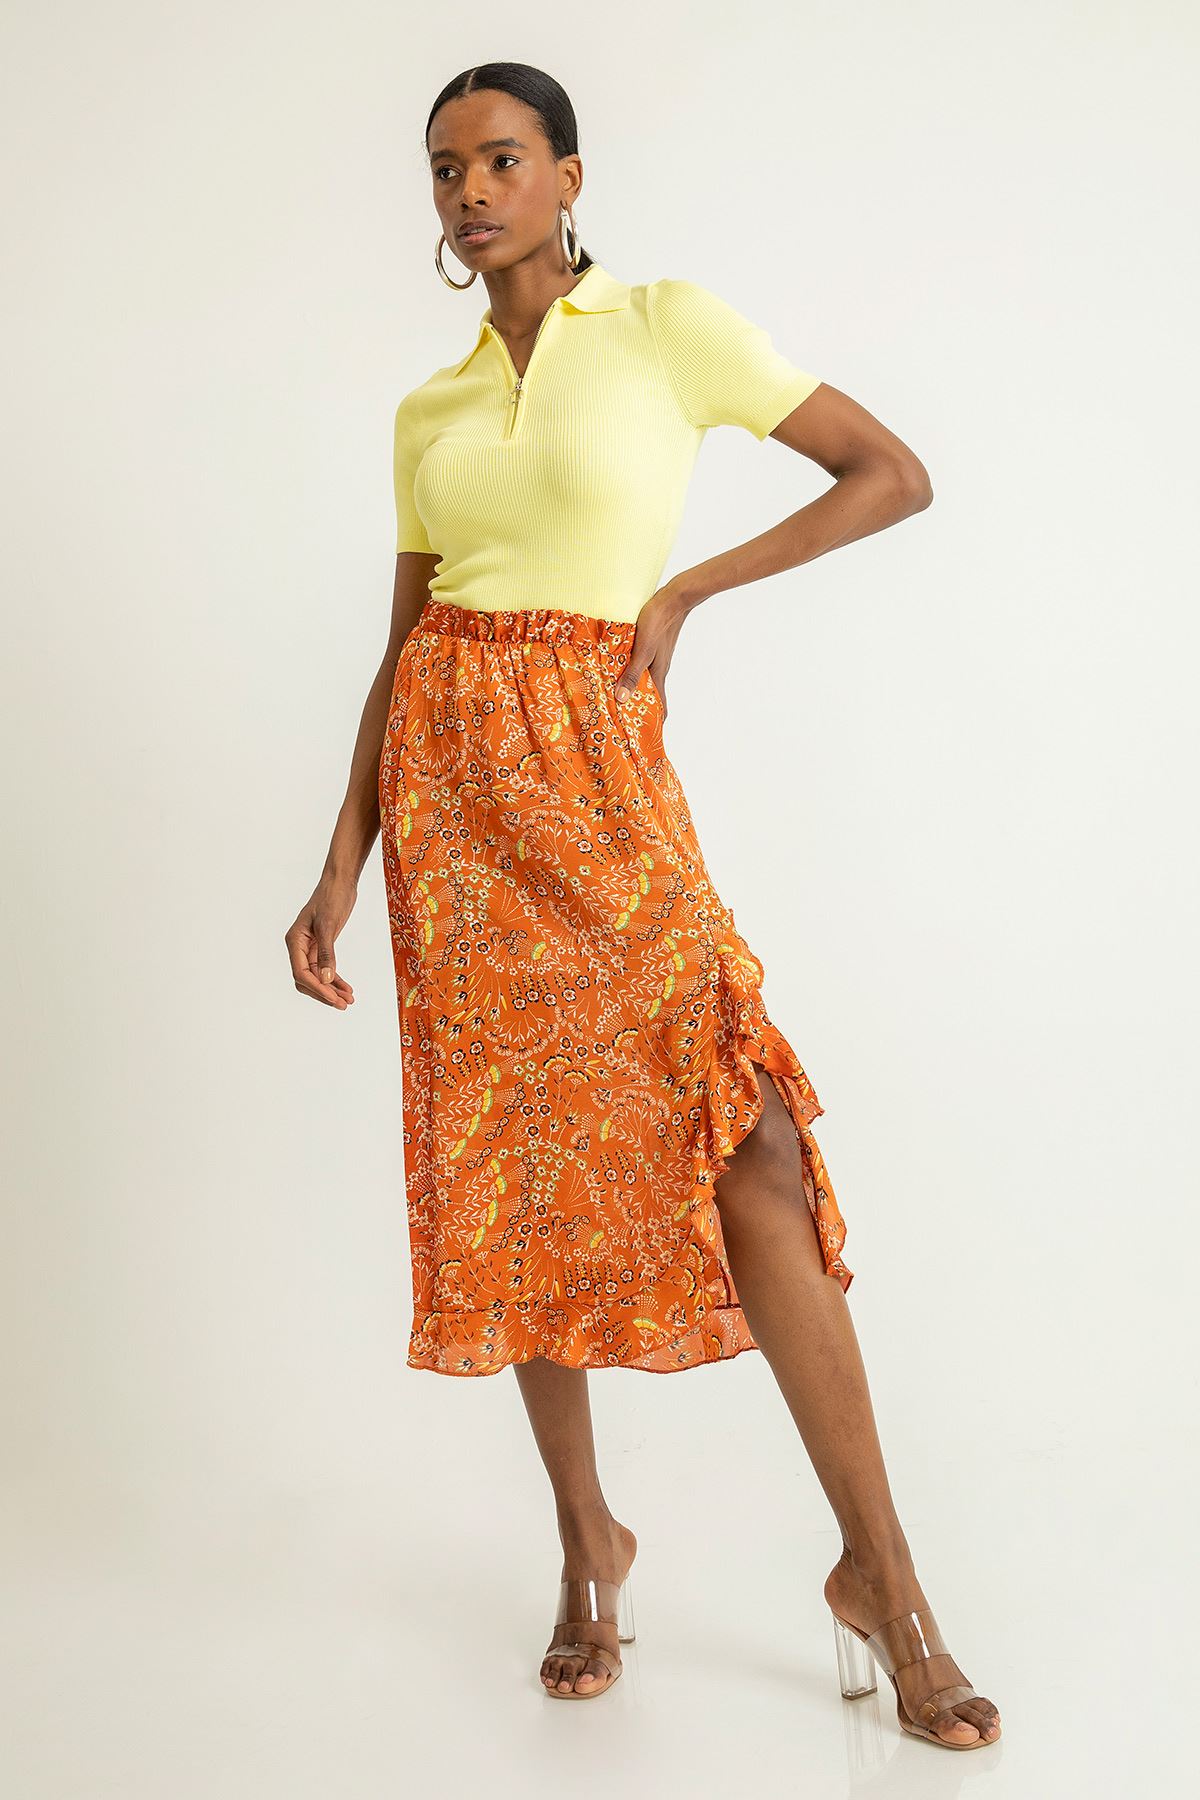 Chiffon Fabric Midi Comfy Fit Floral Print Flywheel Women'S Skirt - Brick 